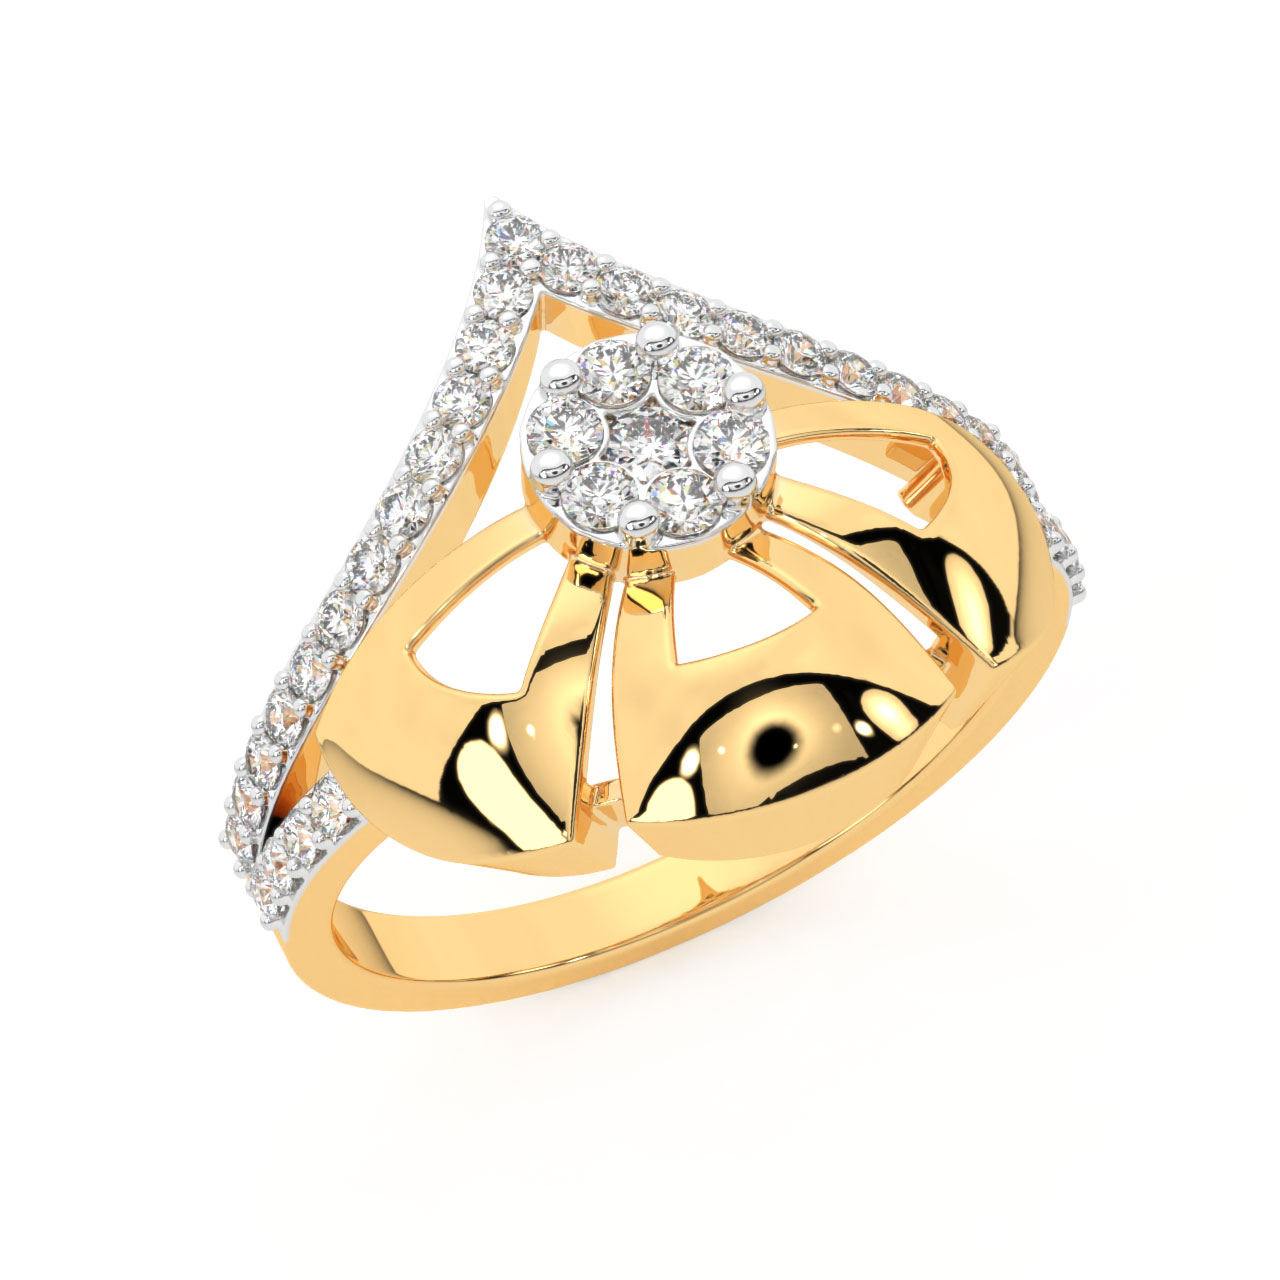 Shon Round Diamond Engagement Ring